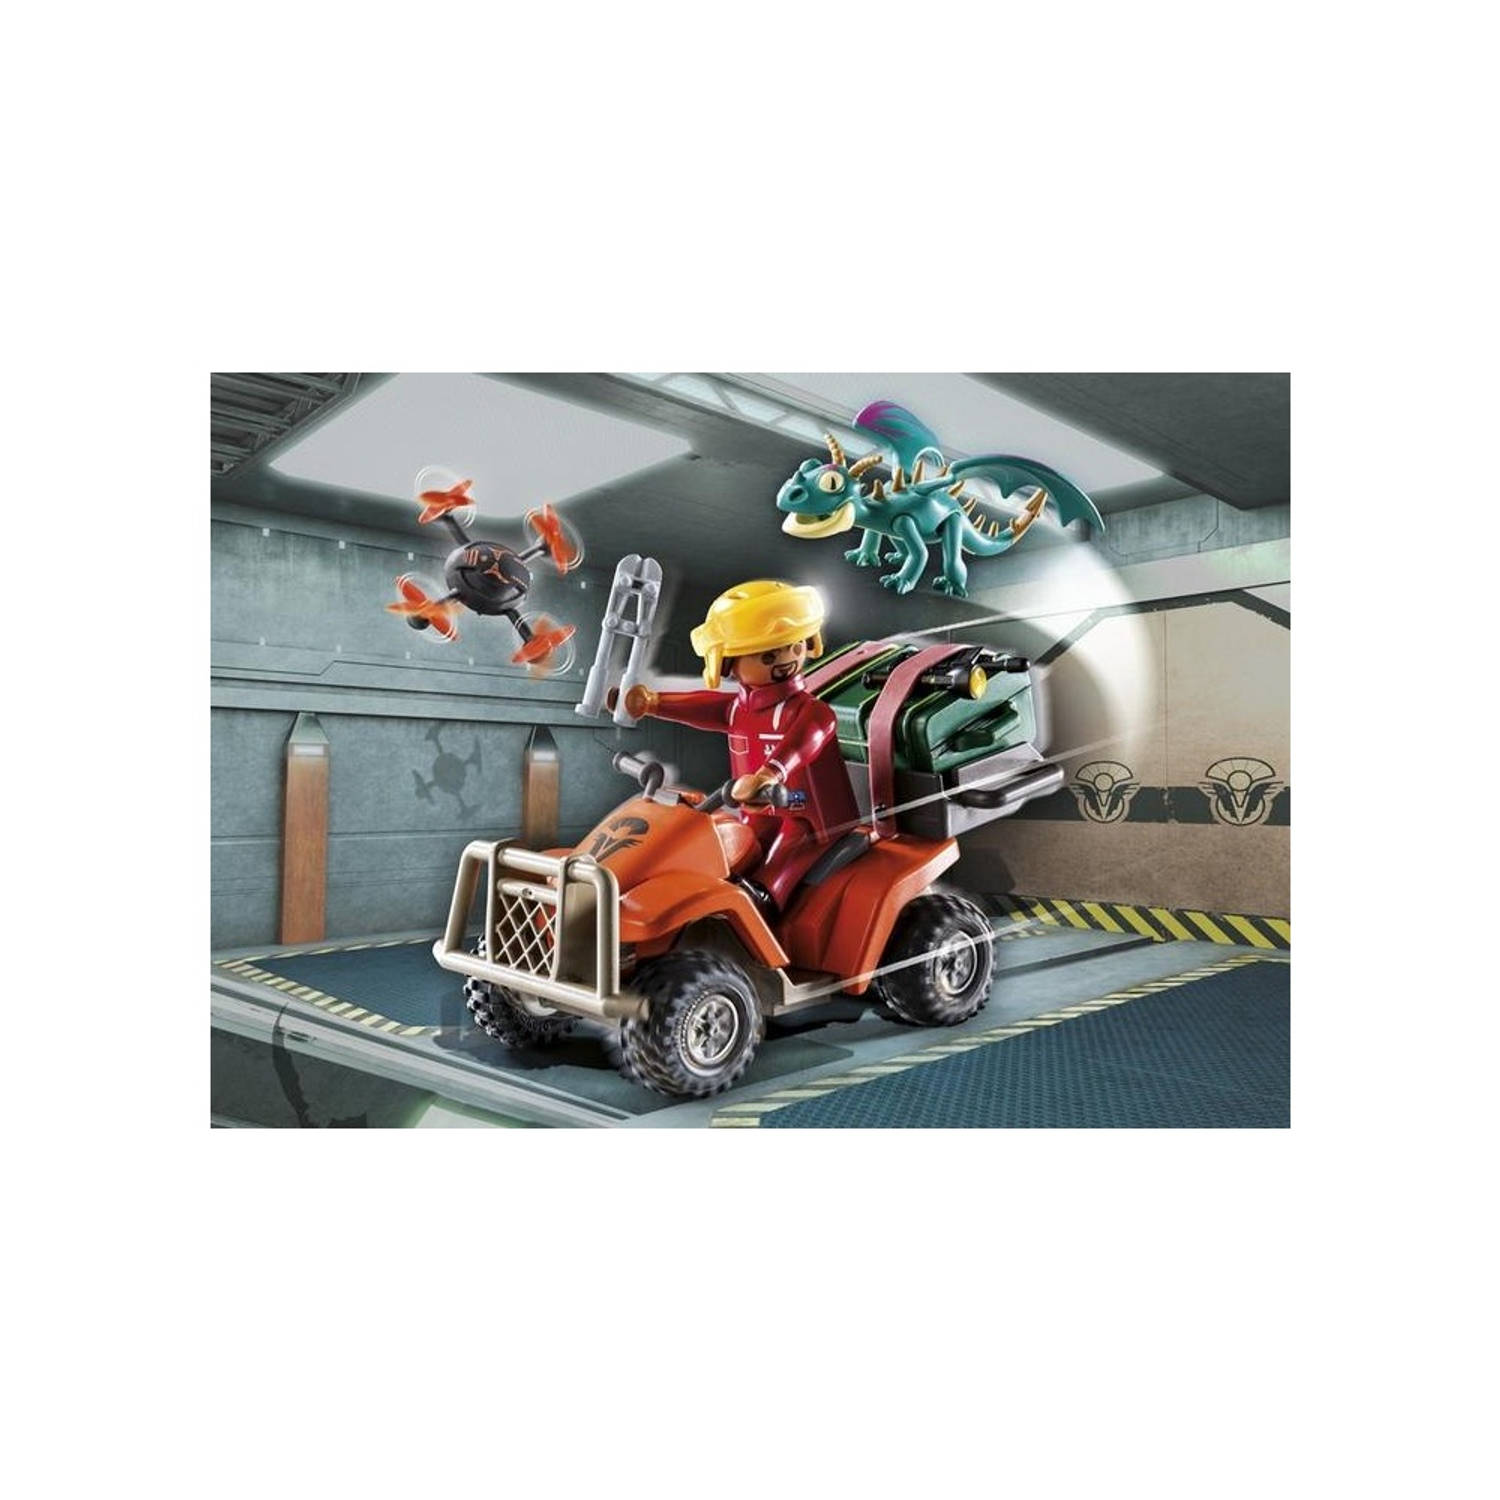 Playmobil® Constructie-speelset Dragons: The Nine Realms Icaris Quad & Phil (71085) (28 stuks)